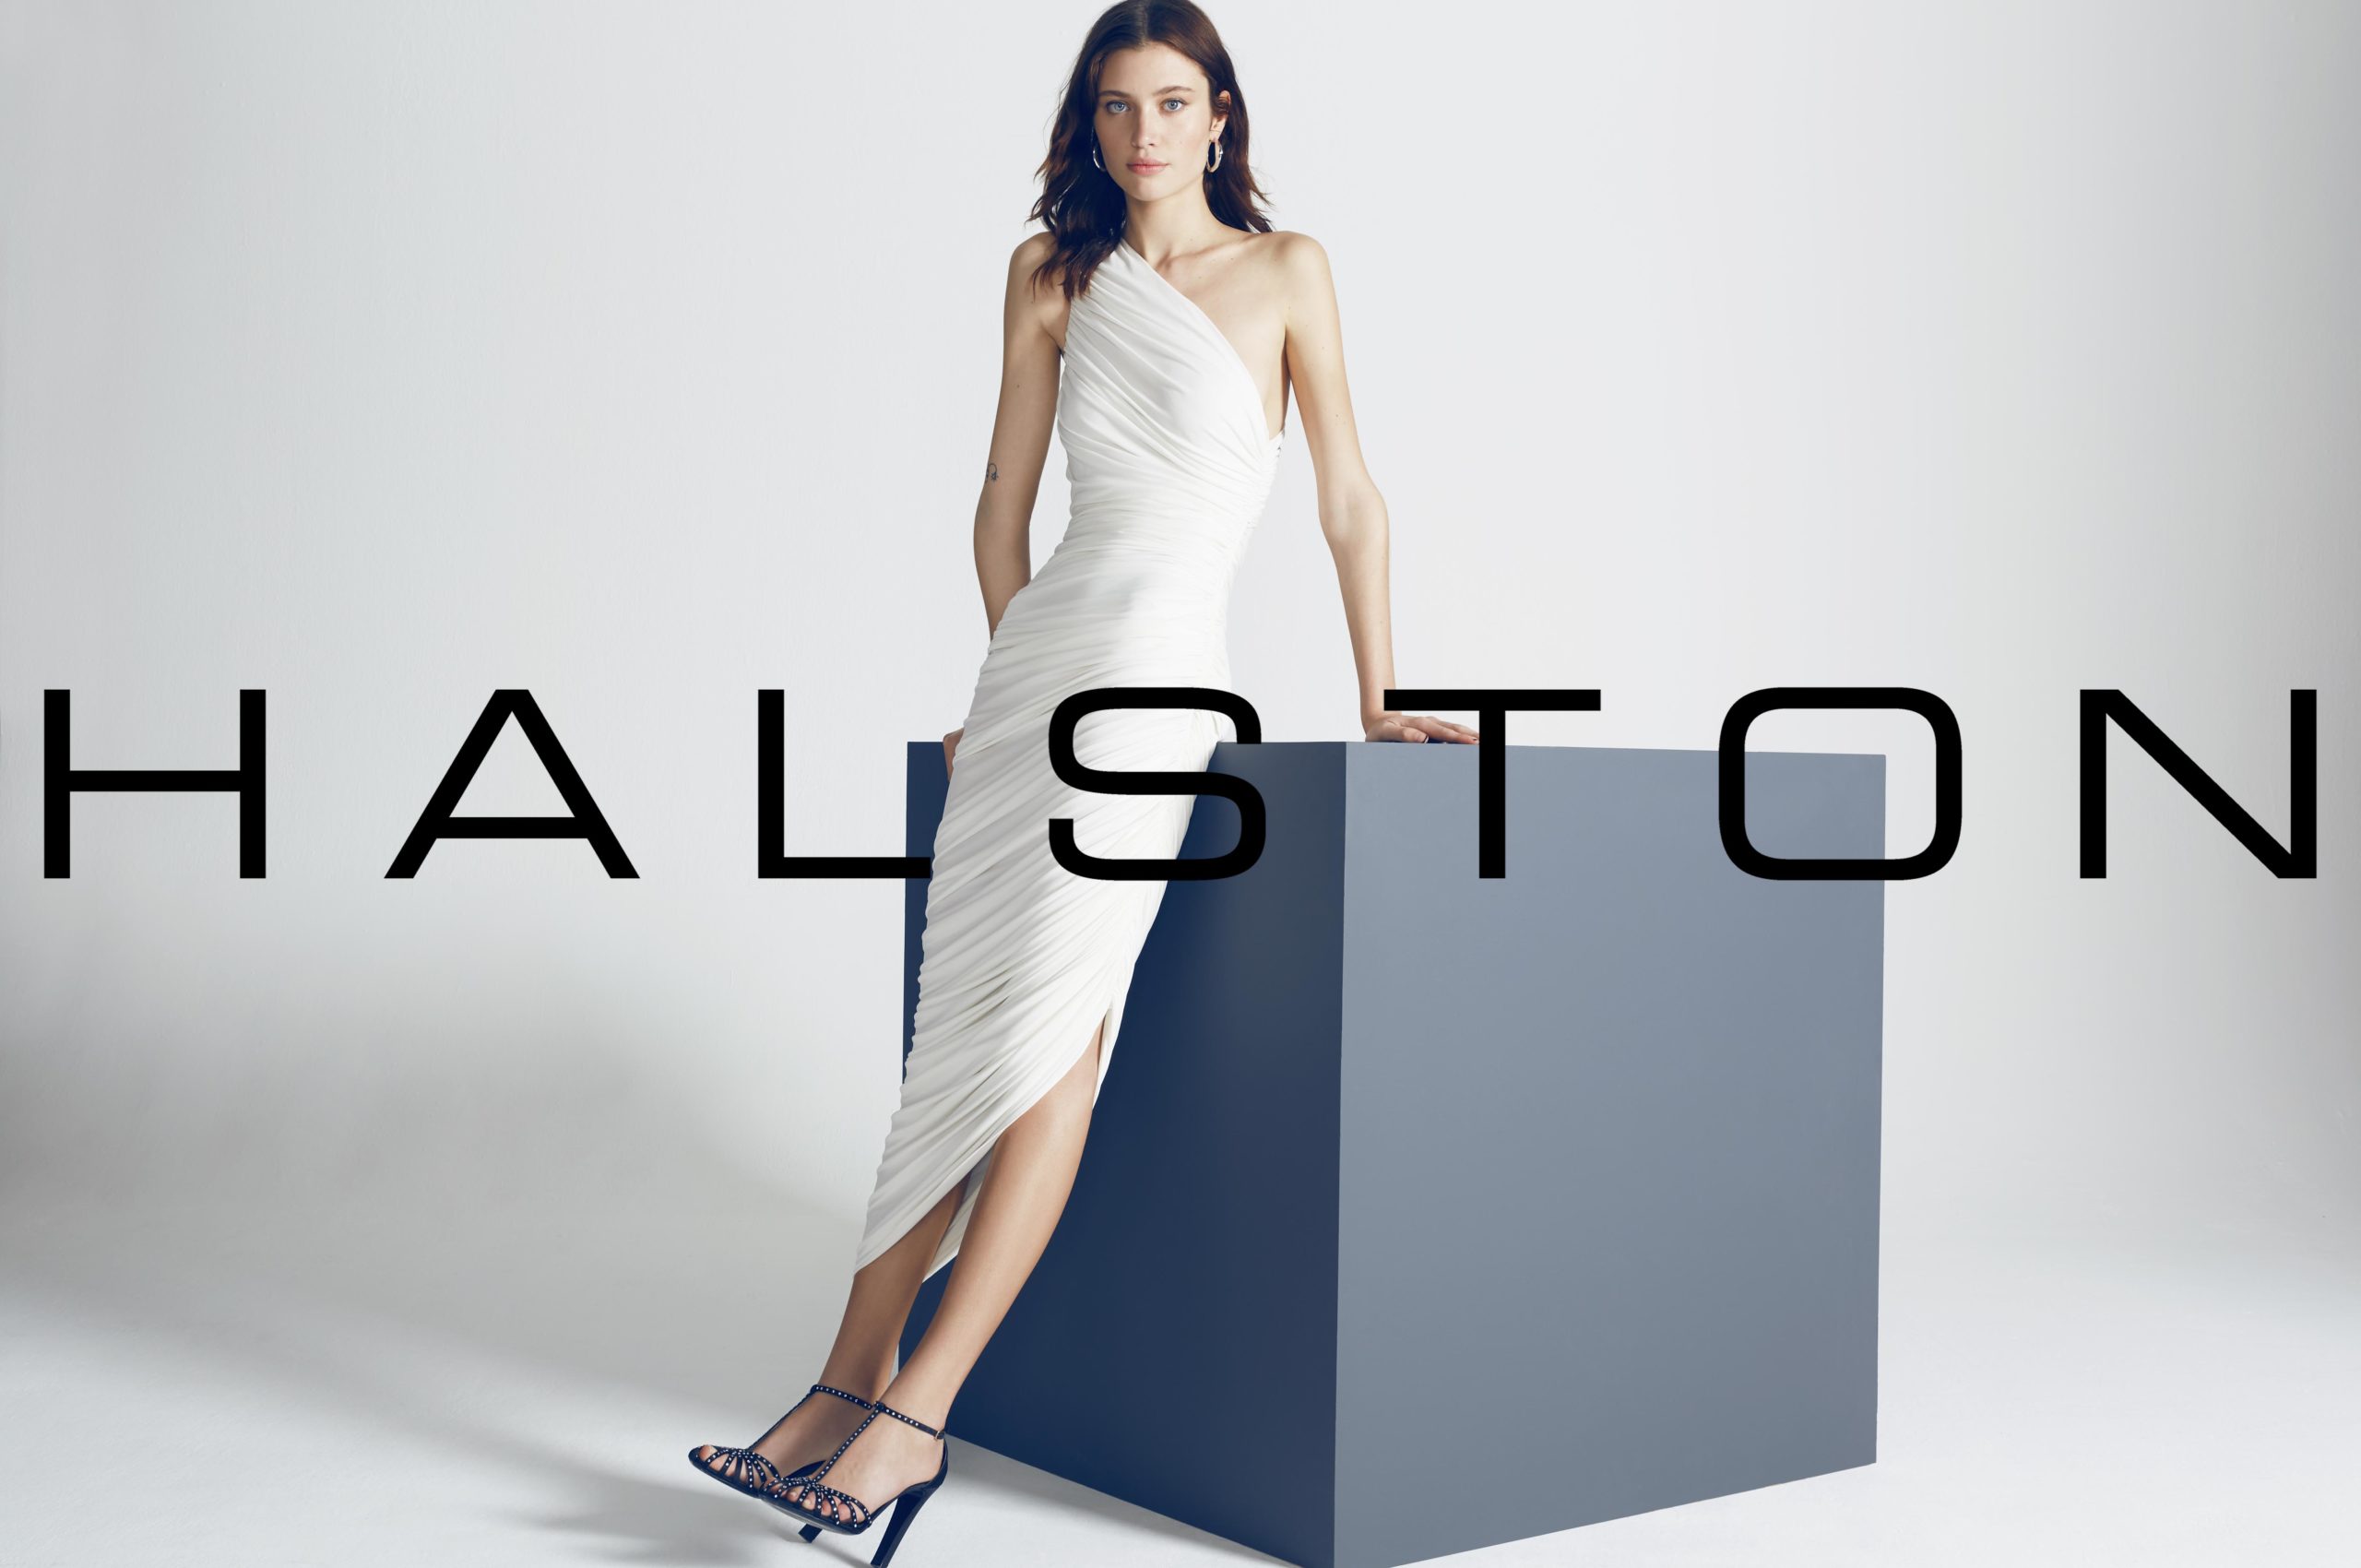 Halston Fashion Advertising Campaign Photography I Greg Sorensen I Fashion & Beauty Photographer I NYC